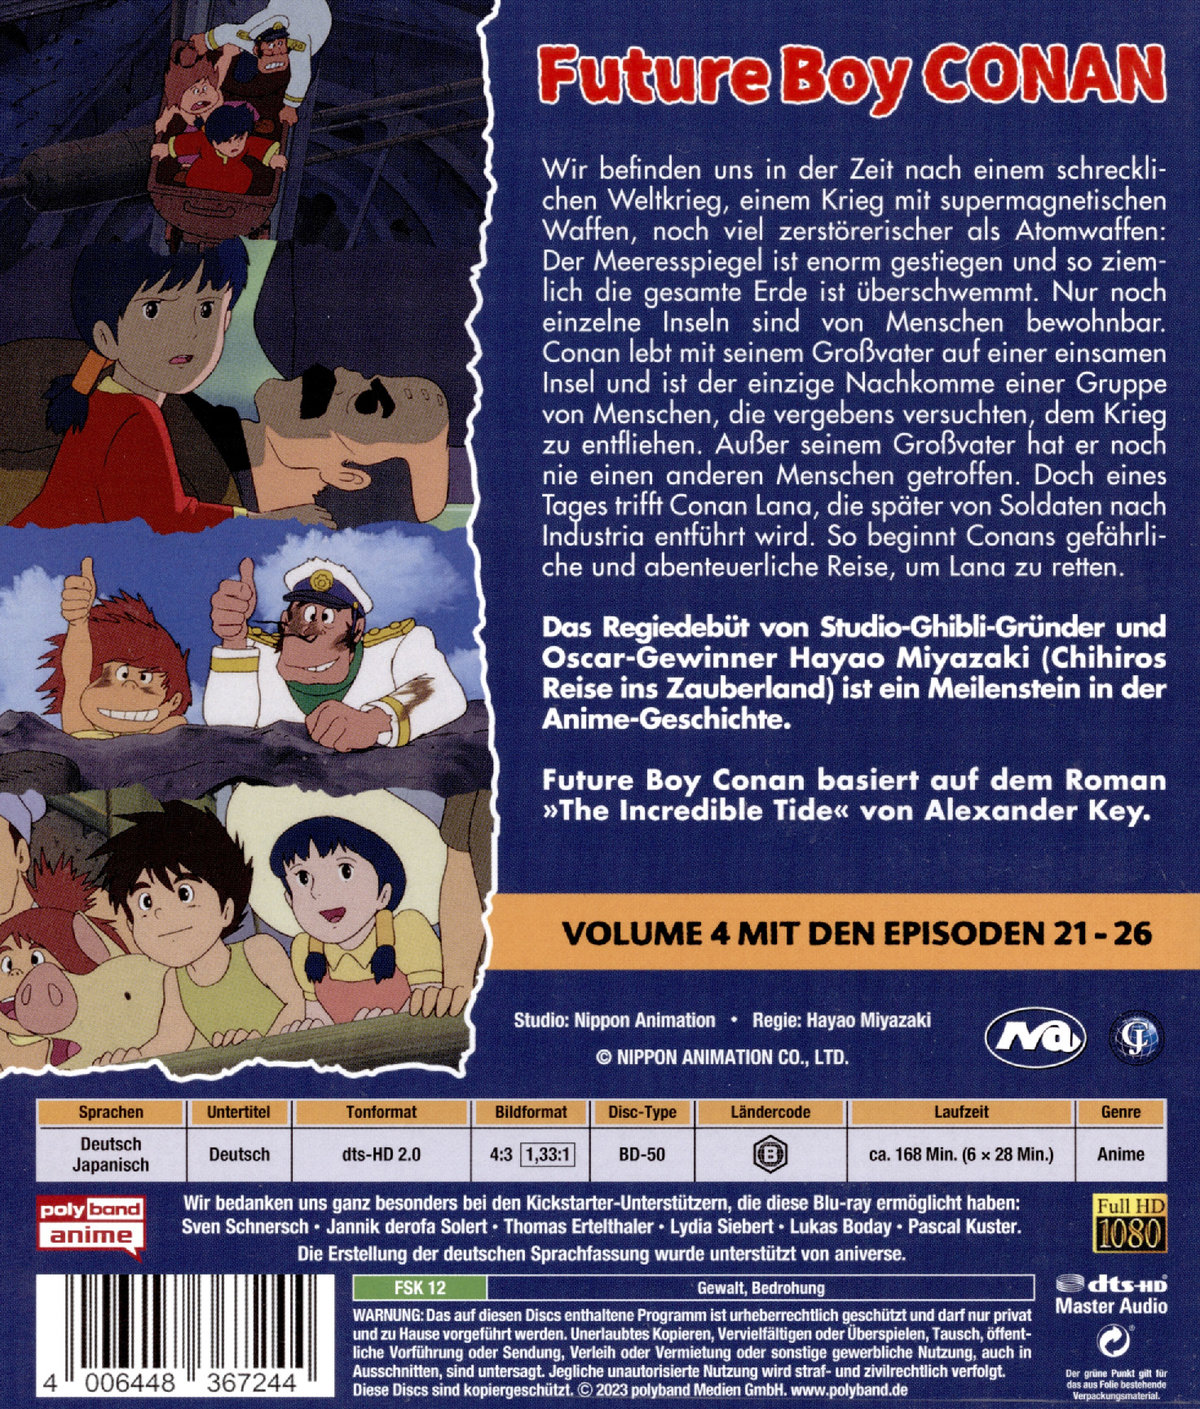 FUTURE BOY CONAN - Vol. 4 LTD. - Limited Edition mit Art Cards  (Blu-ray Disc)